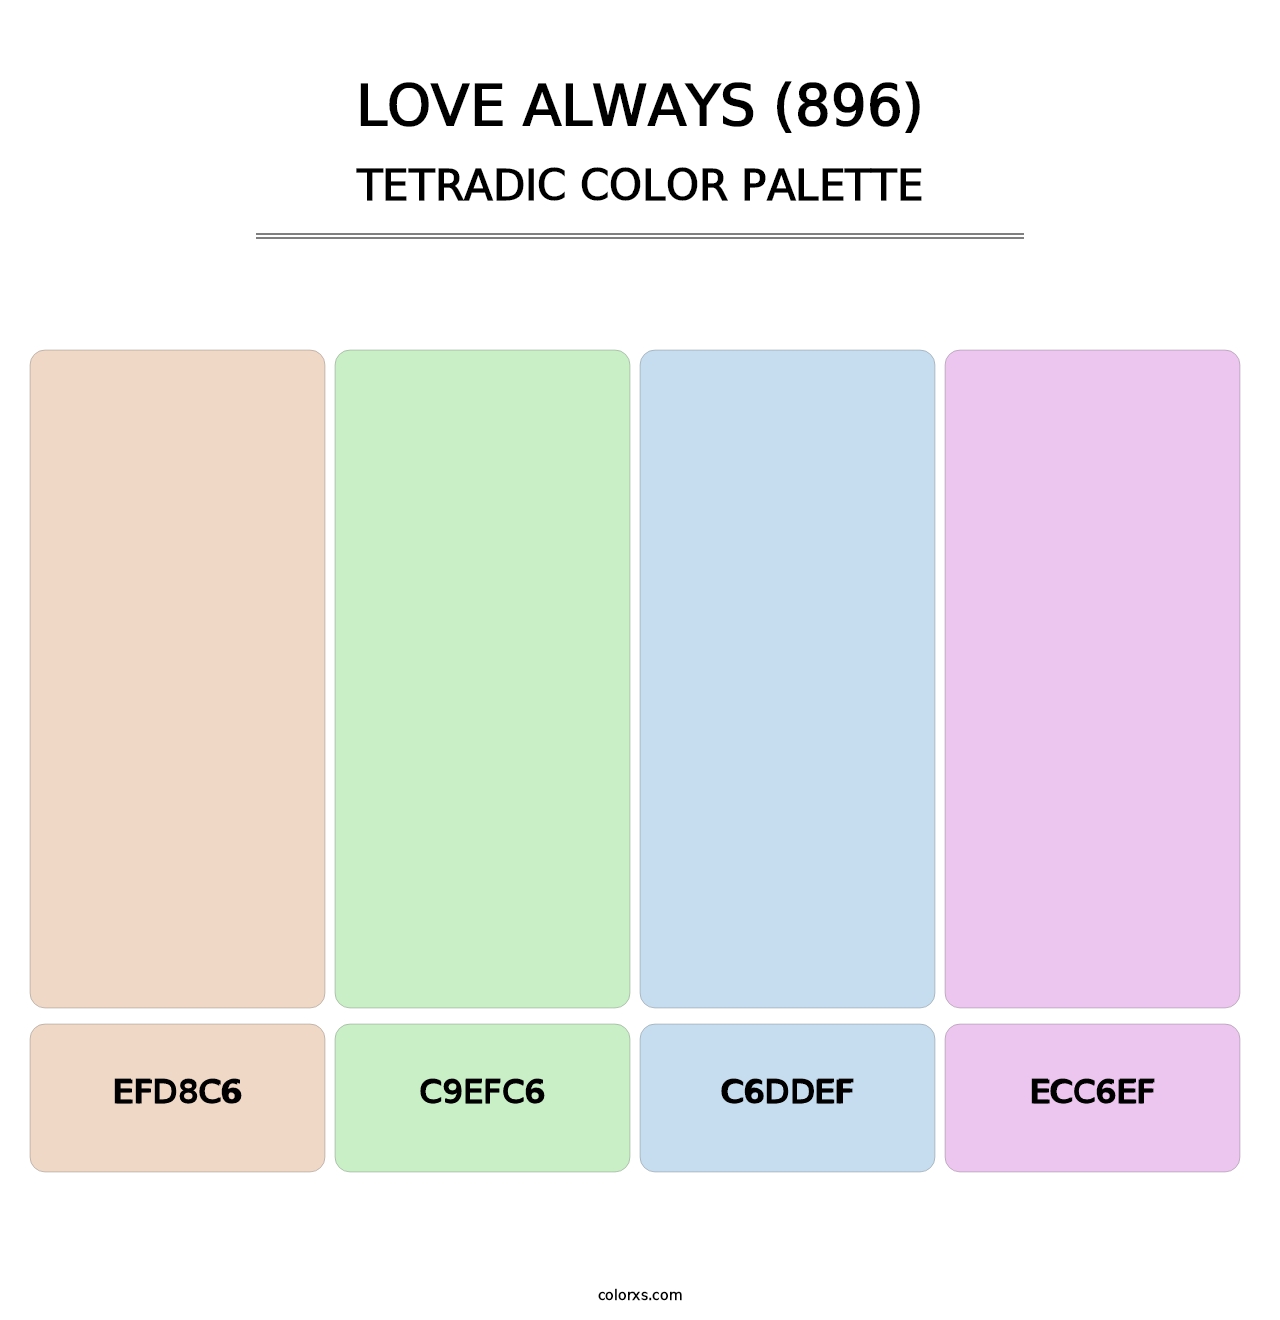 Love Always (896) - Tetradic Color Palette